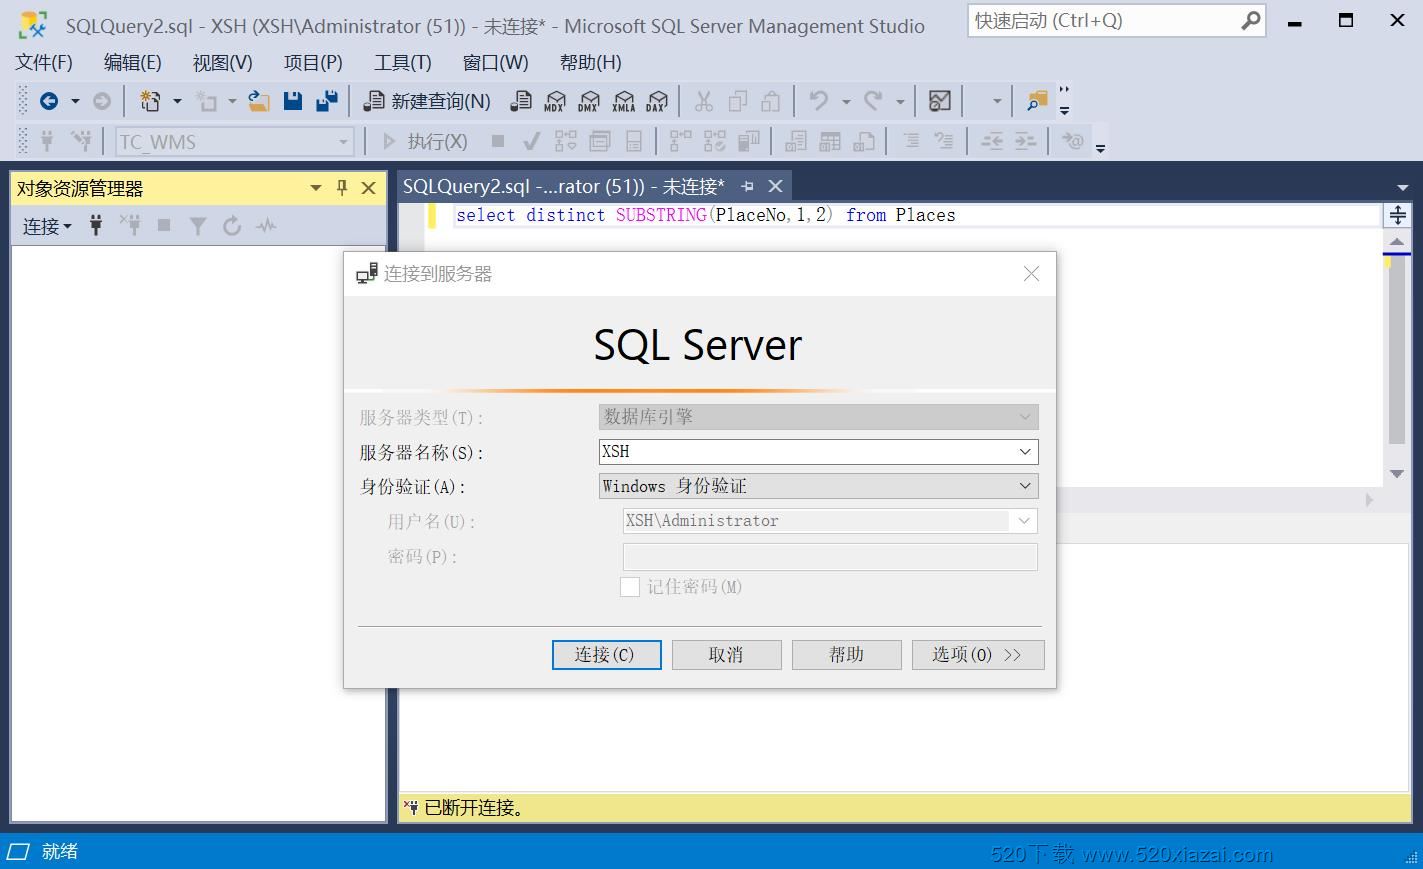 SQL Server Management Studio 18.6 多国语言版下载